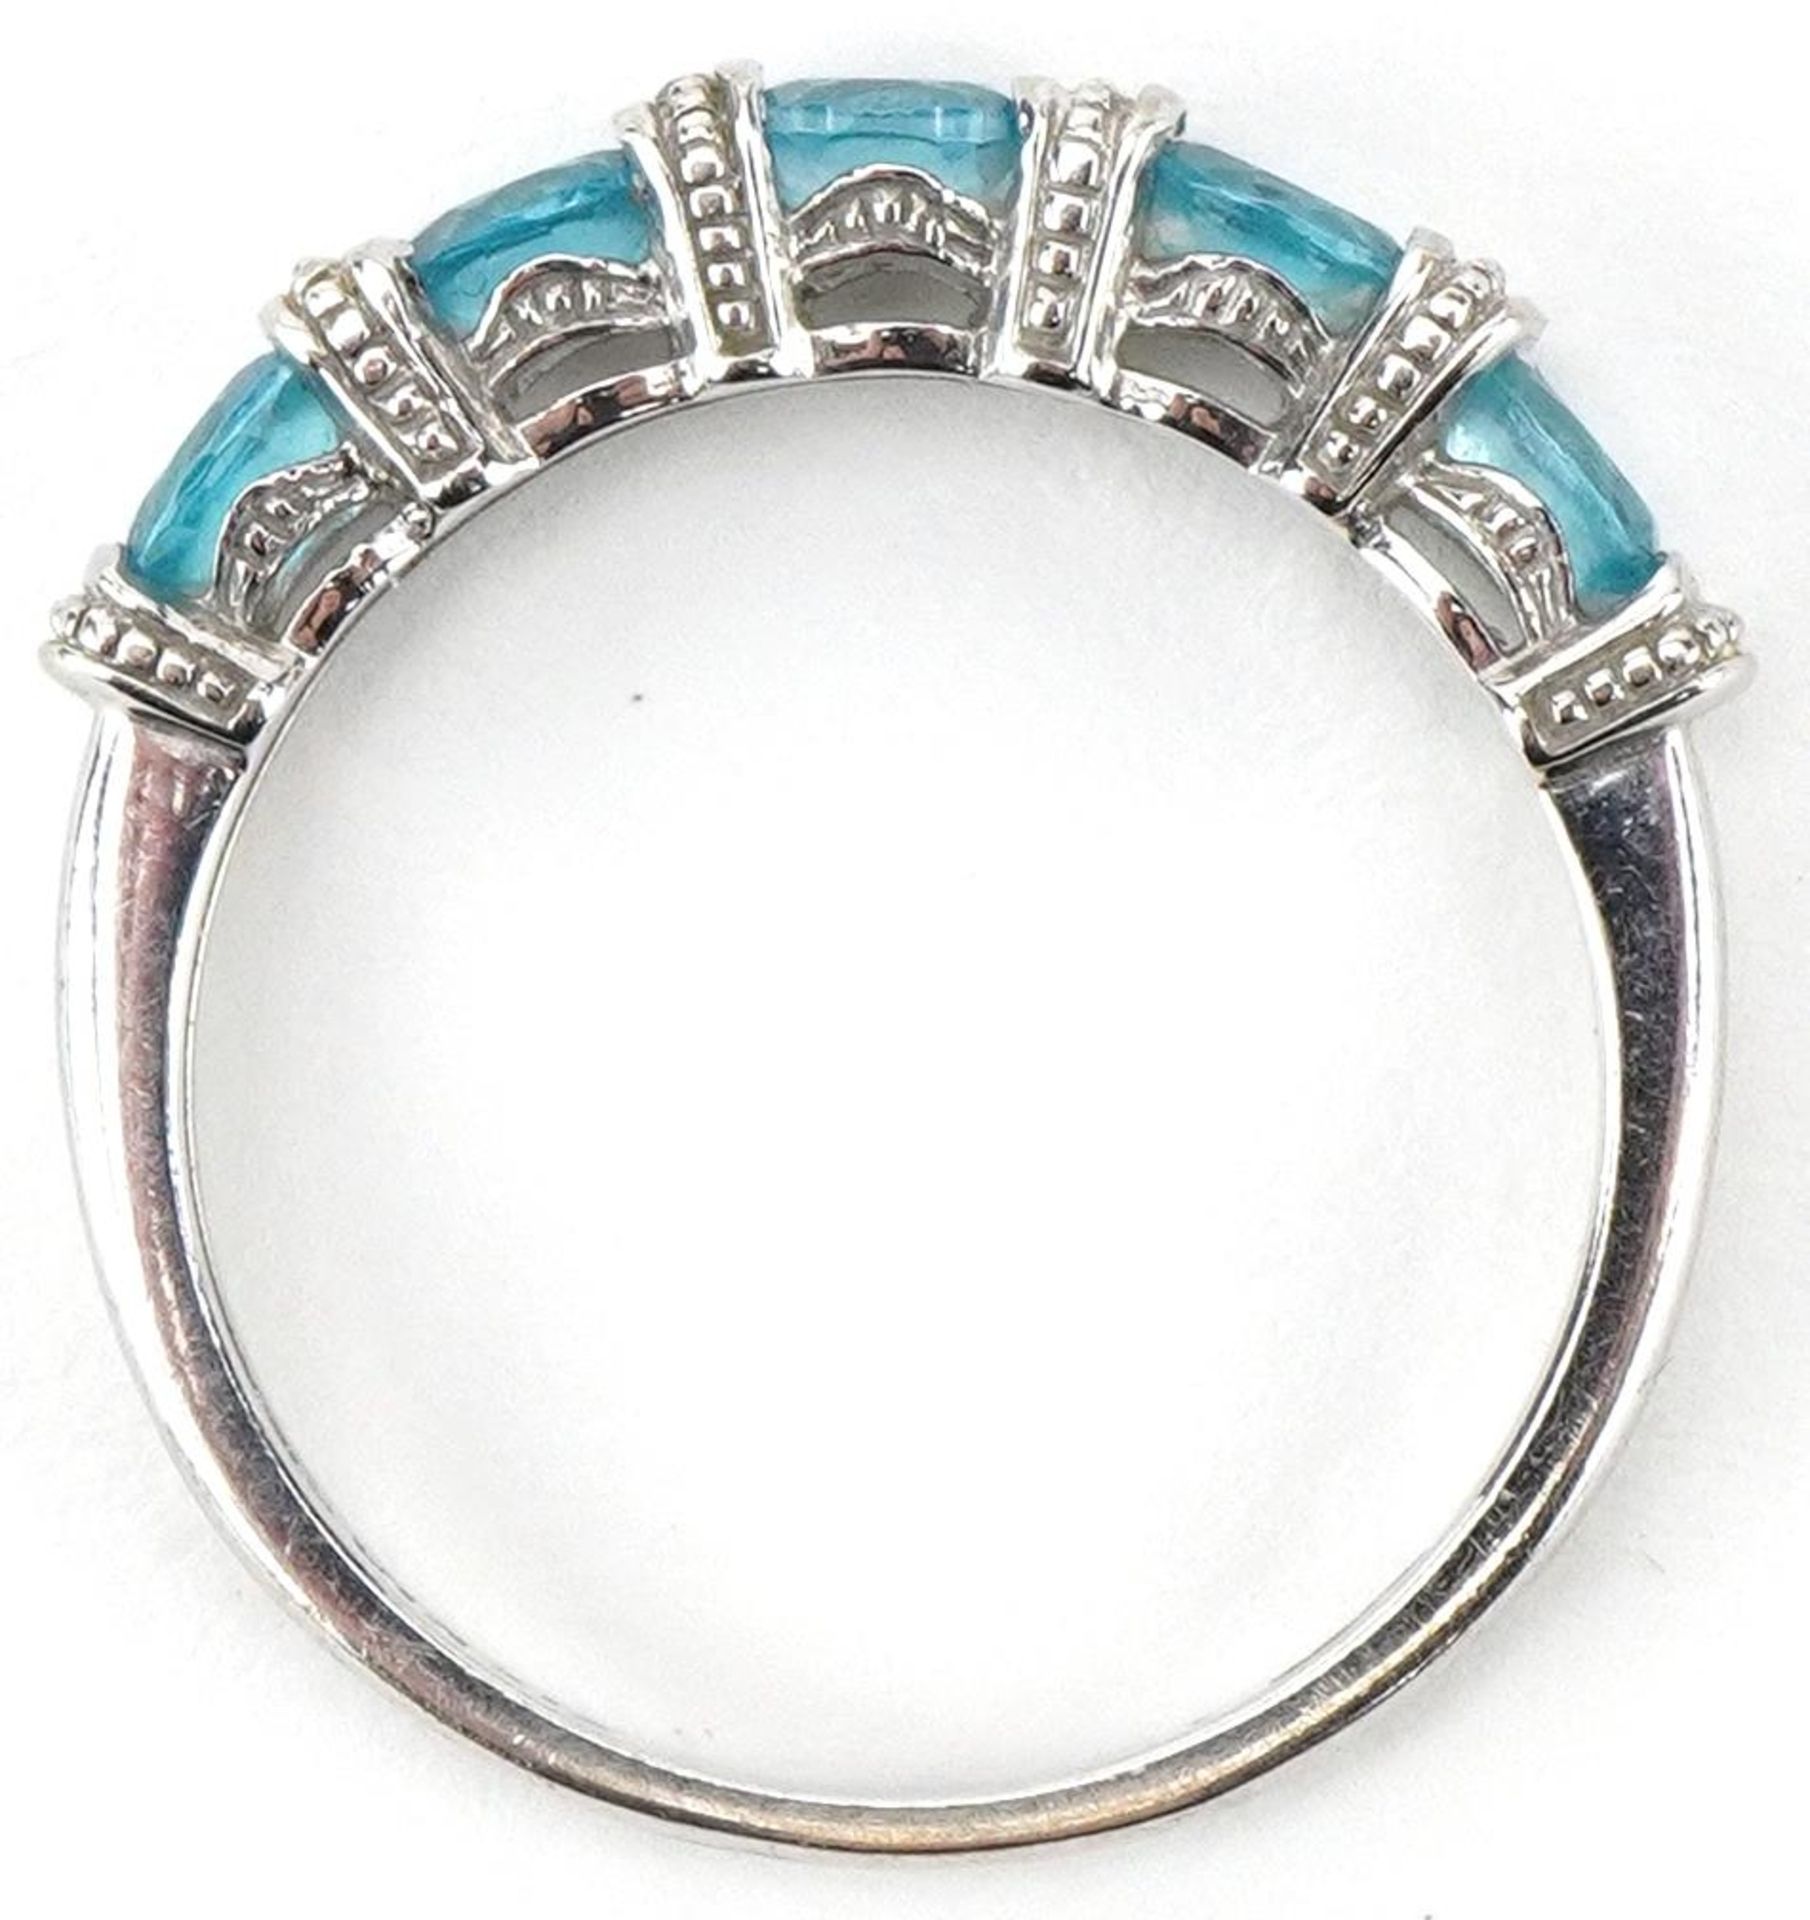 9ct white gold aquamarine and diamond half eternity ring, size O/P, 2.2g - Image 3 of 5